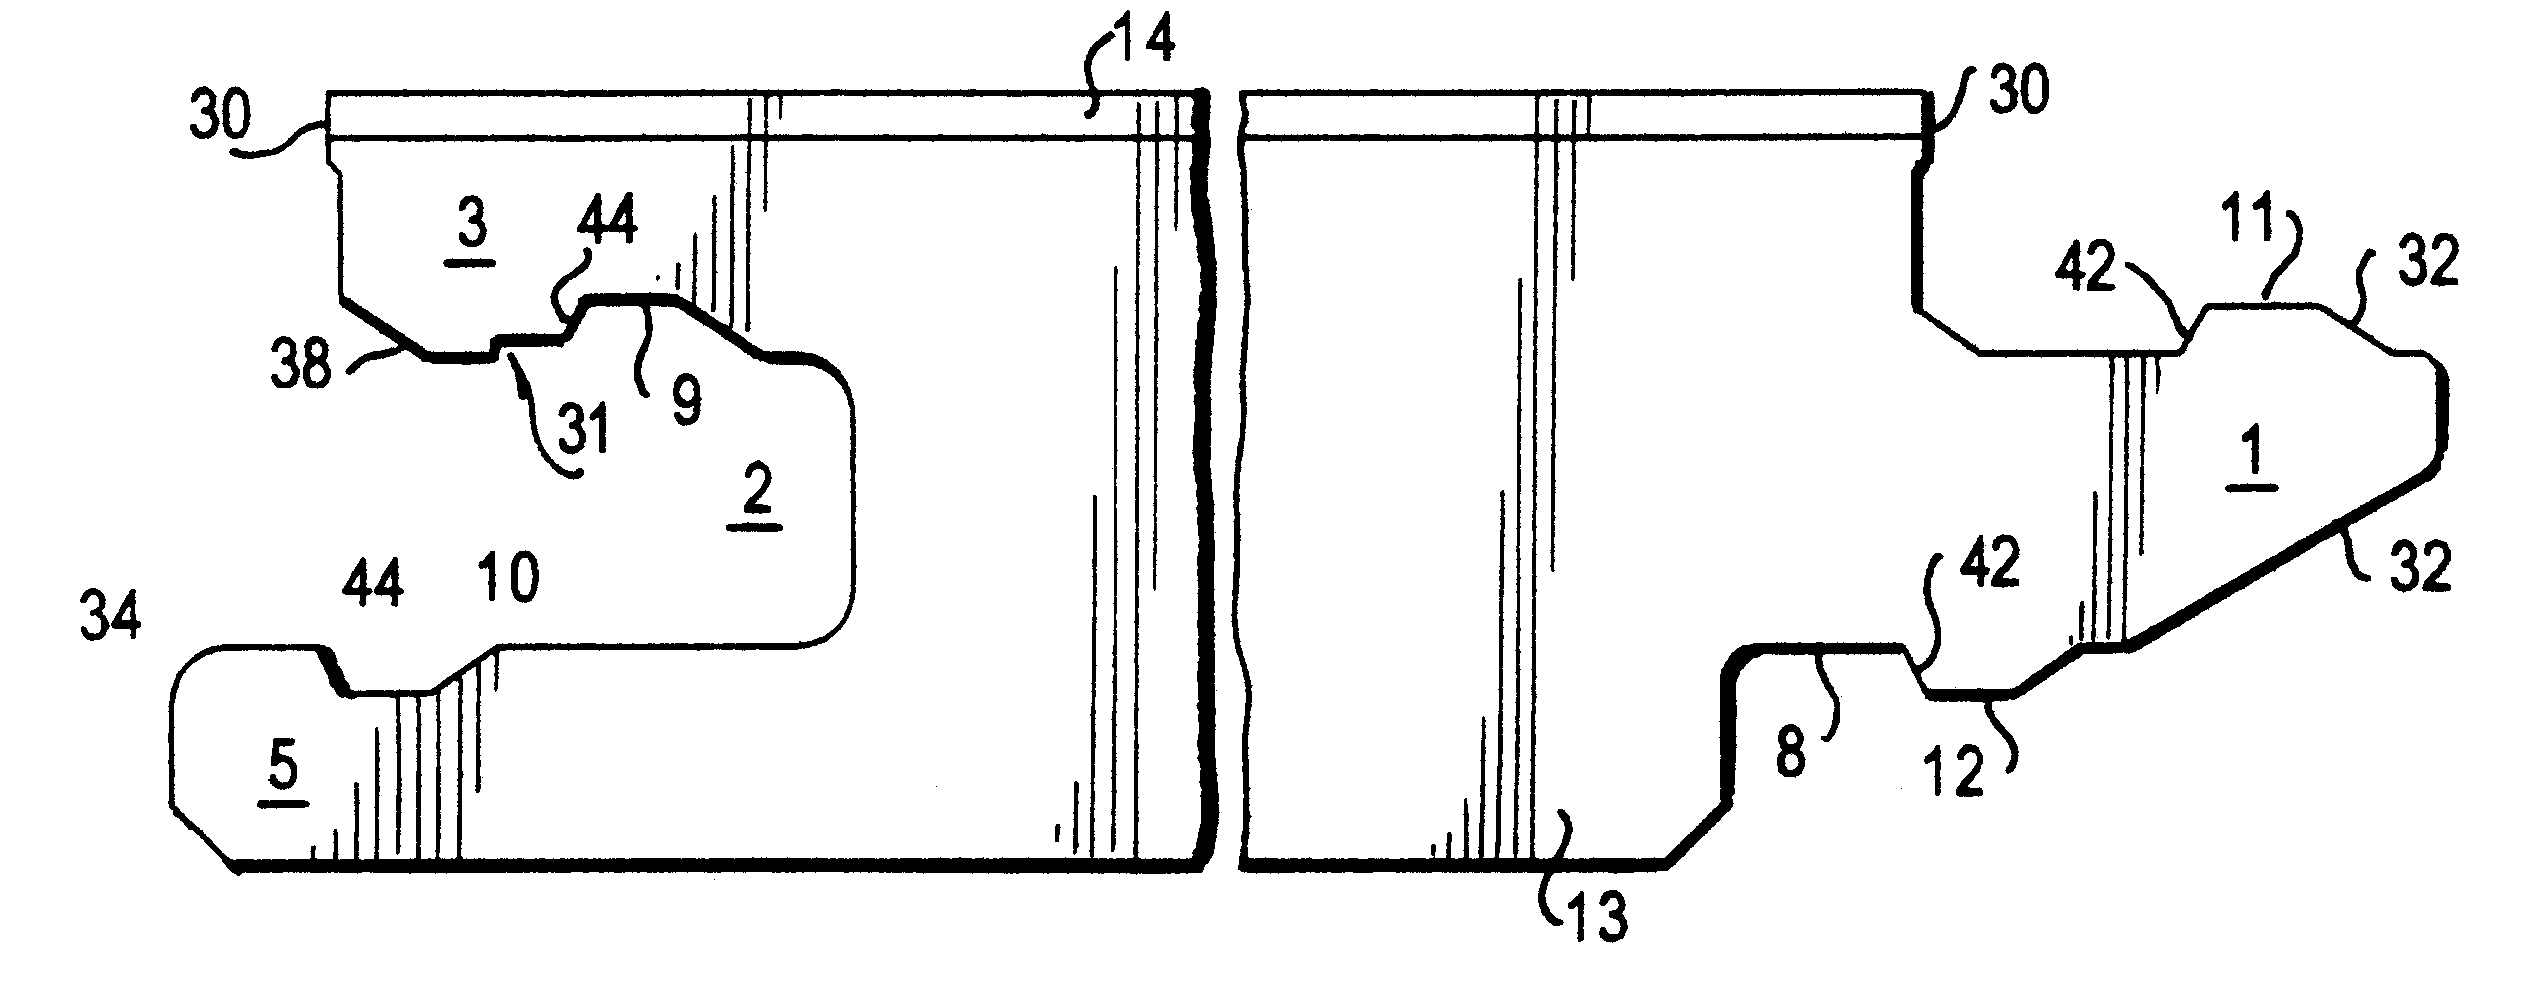 Flooring panel or wall panel